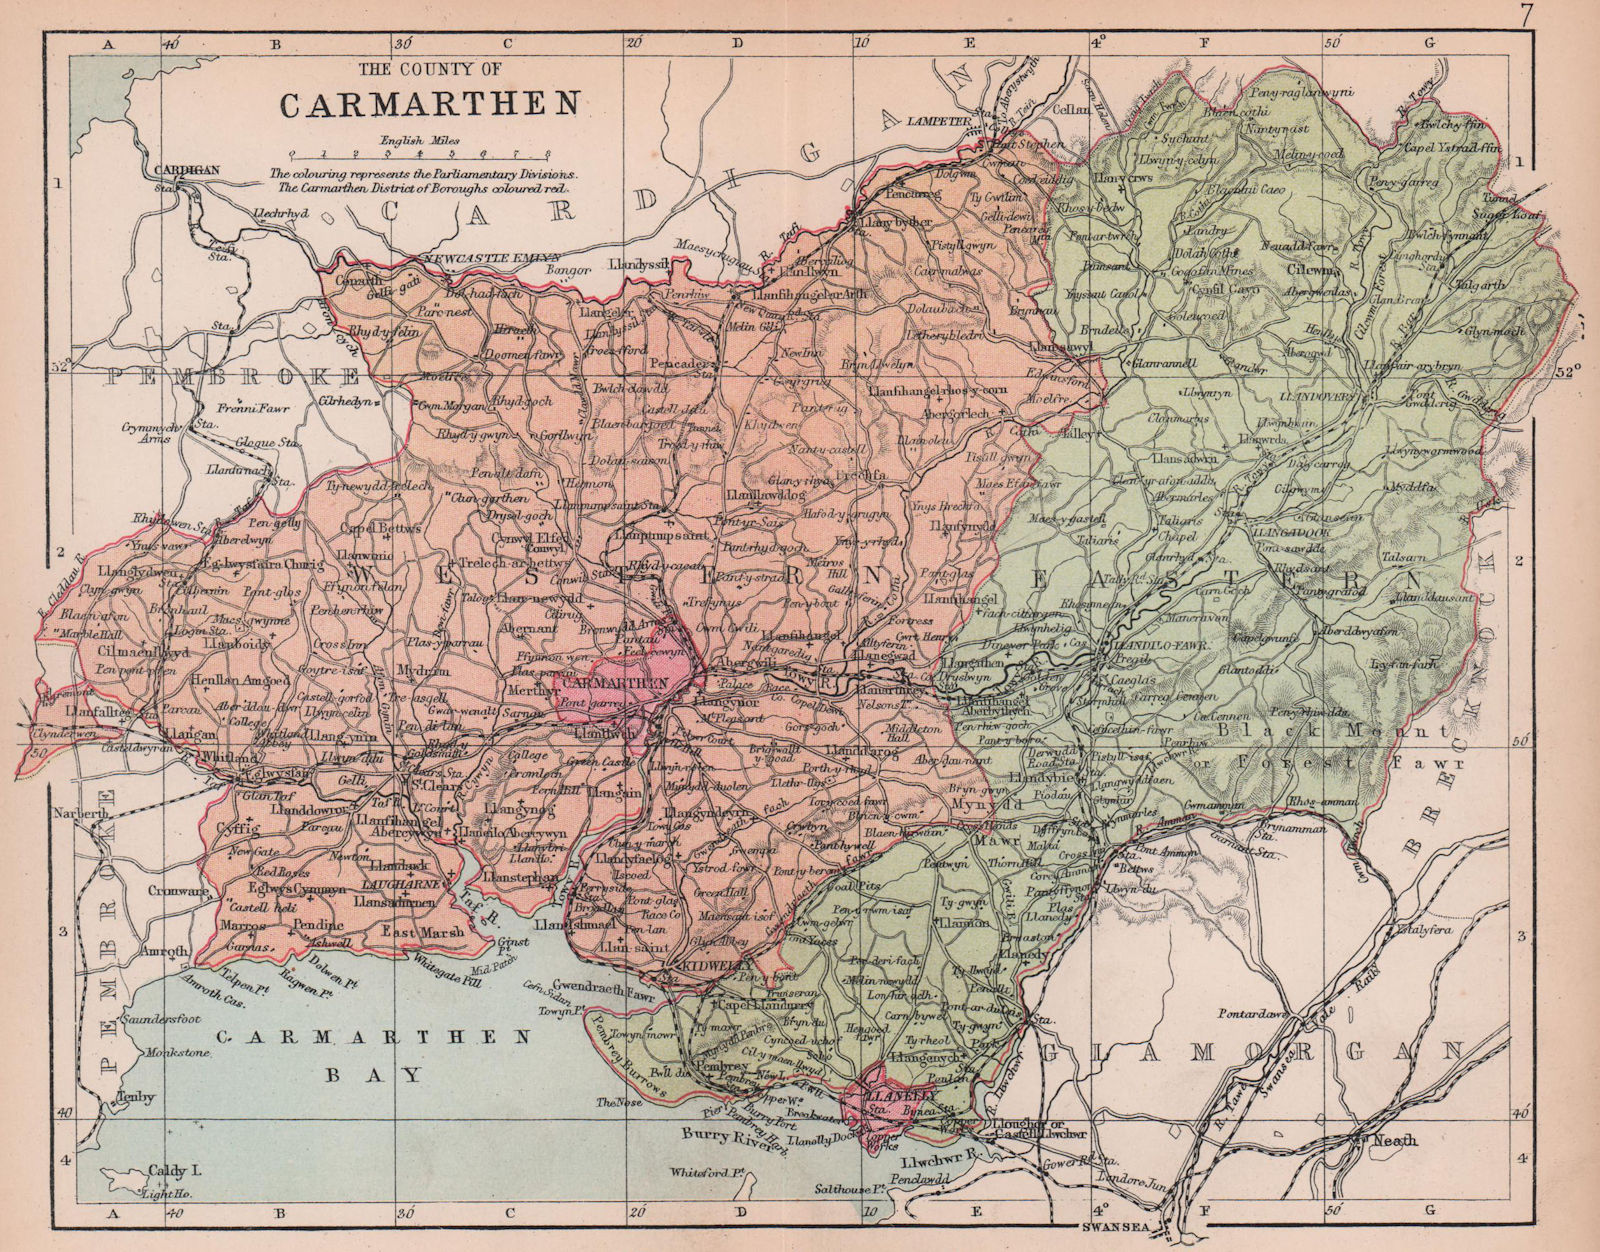 Associate Product CARMARTHENSHIRE "The County of Carmarthen" Llanelli Wales BARTHOLOMEW 1882 map